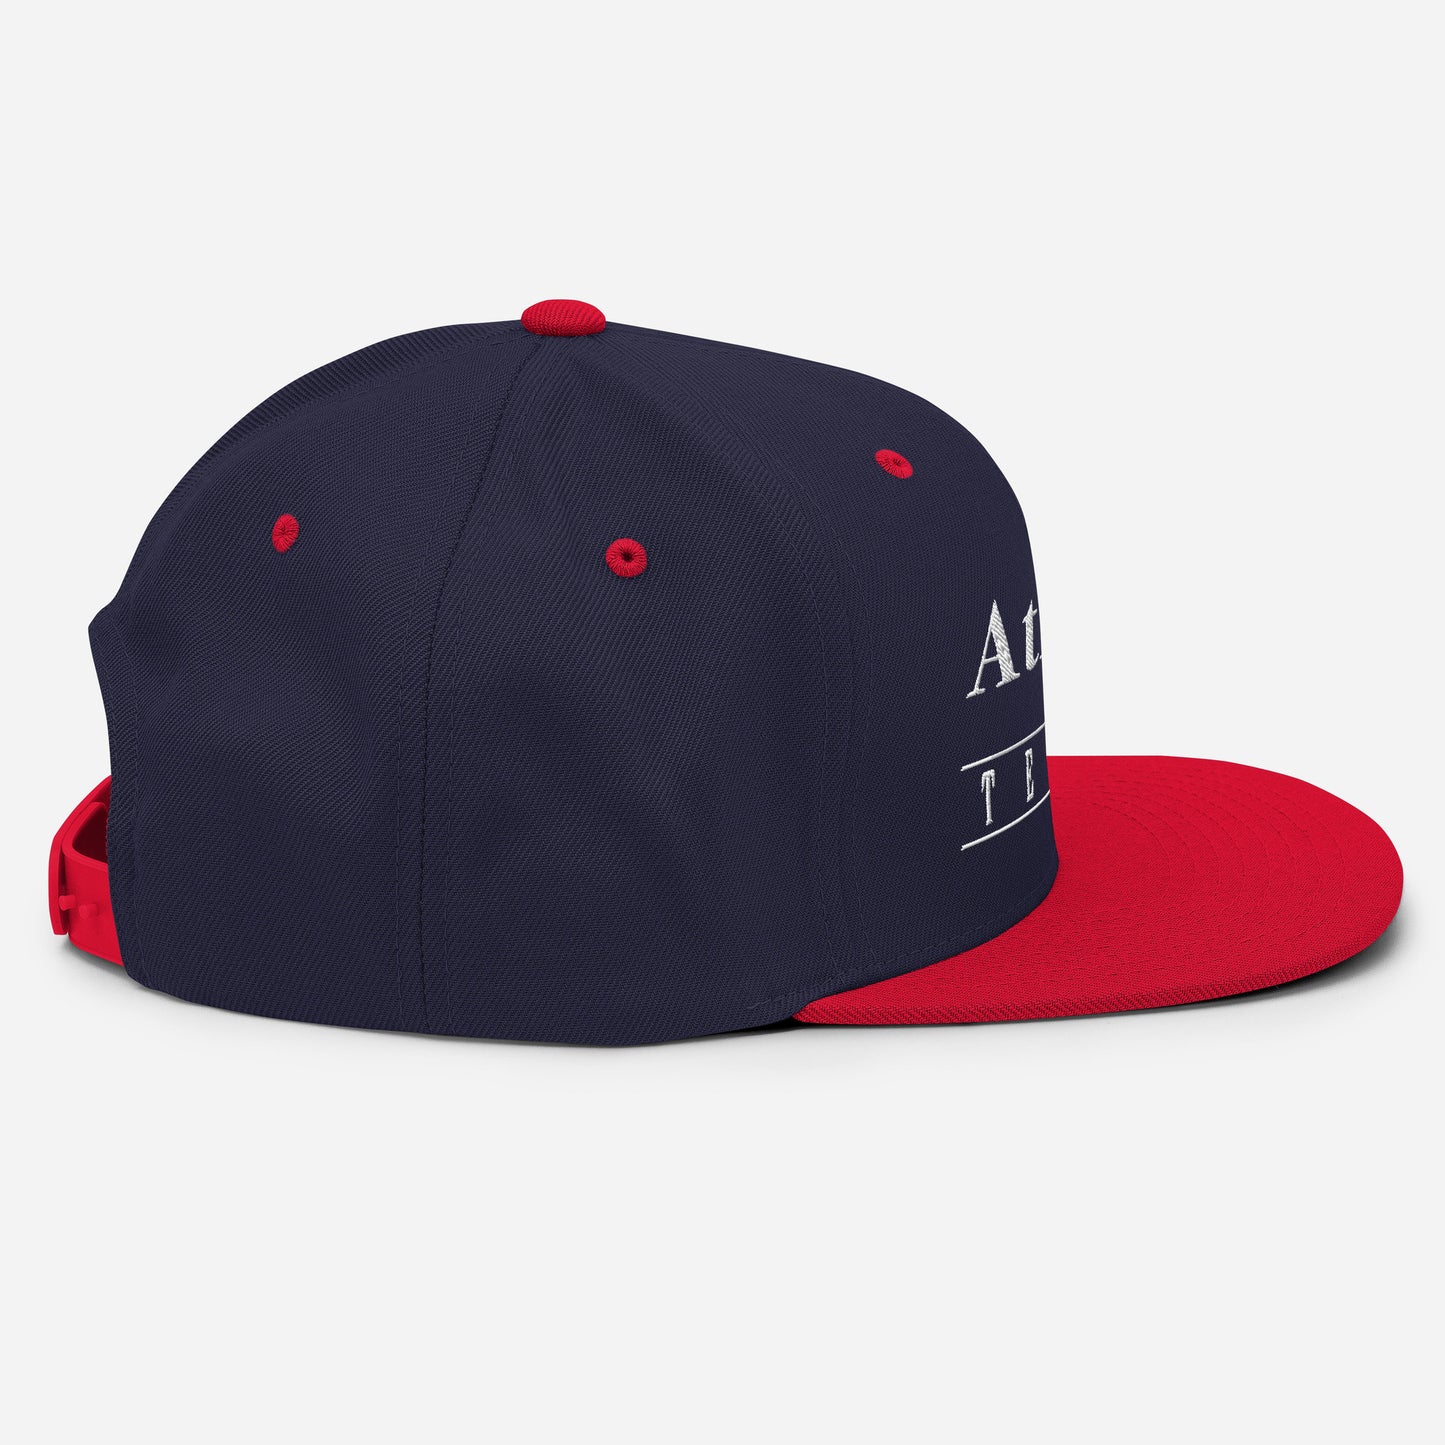 Braves-Inspired Atlanta Tennis snapback hat